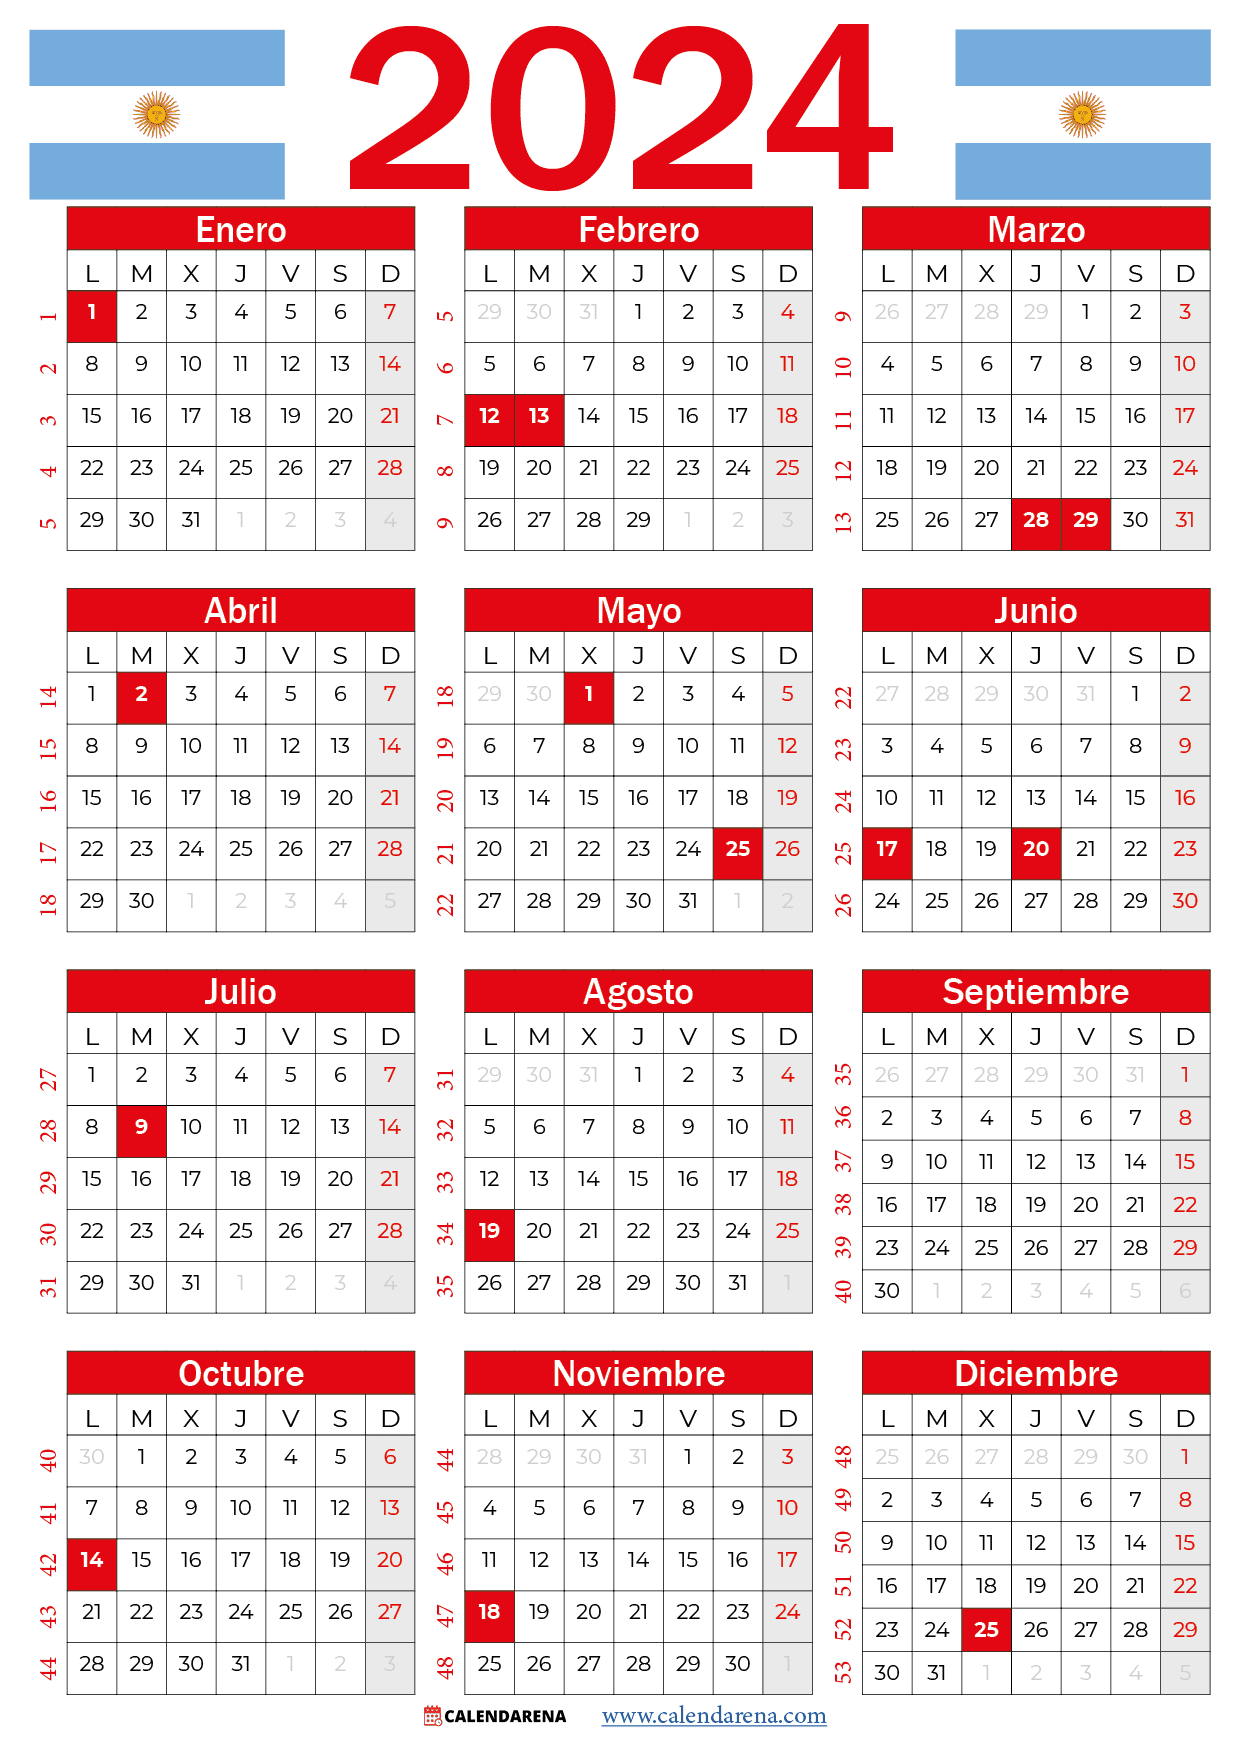 Calendario 2024 argentina con festivos PDF by Calendarena Medium